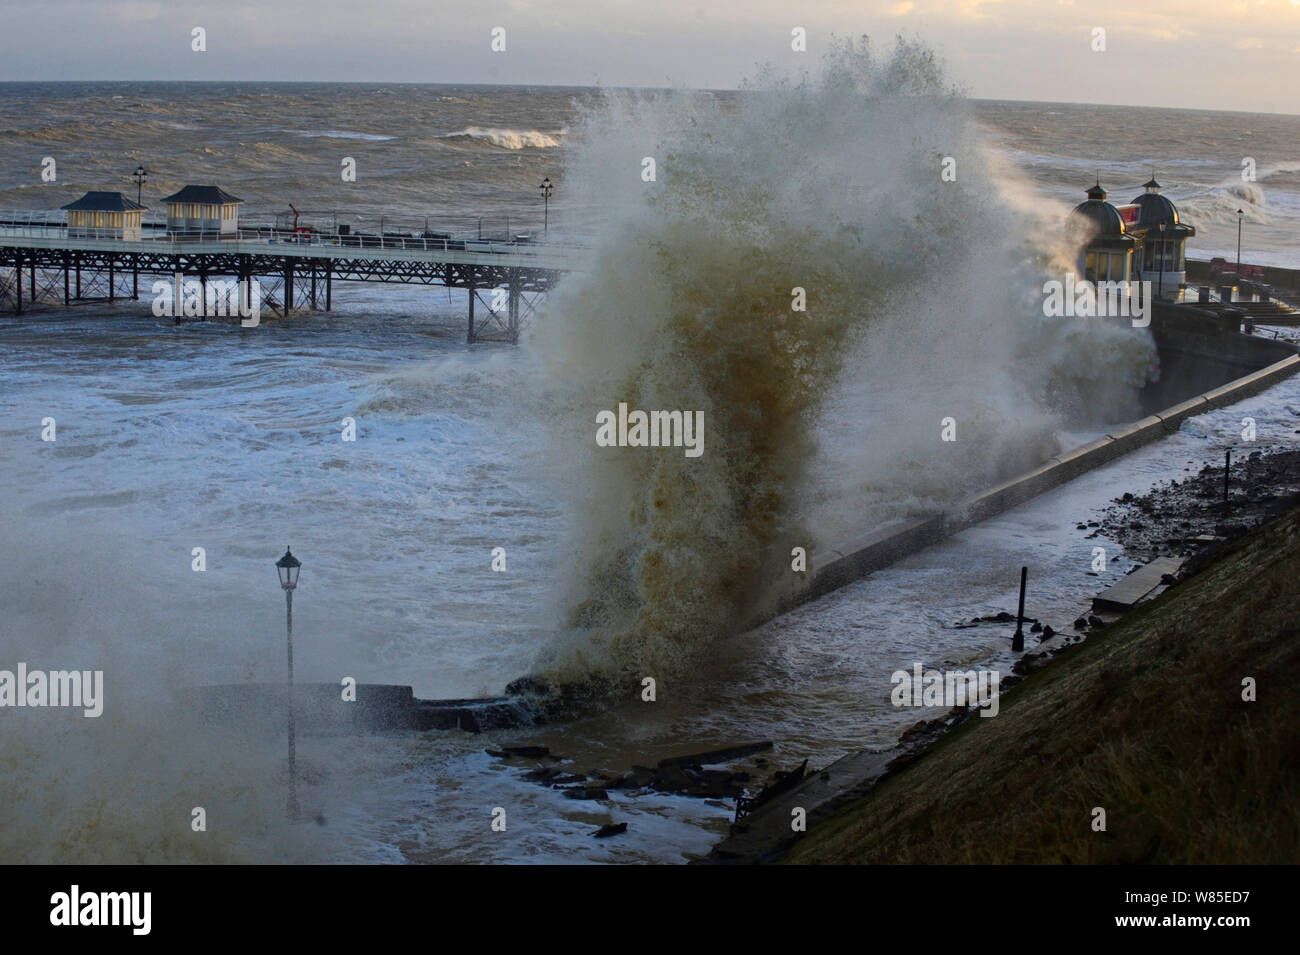 High waves lashing Cromer seafront and pier during storm surge., Norfolk, England, UK. December 2013. Stock Photo